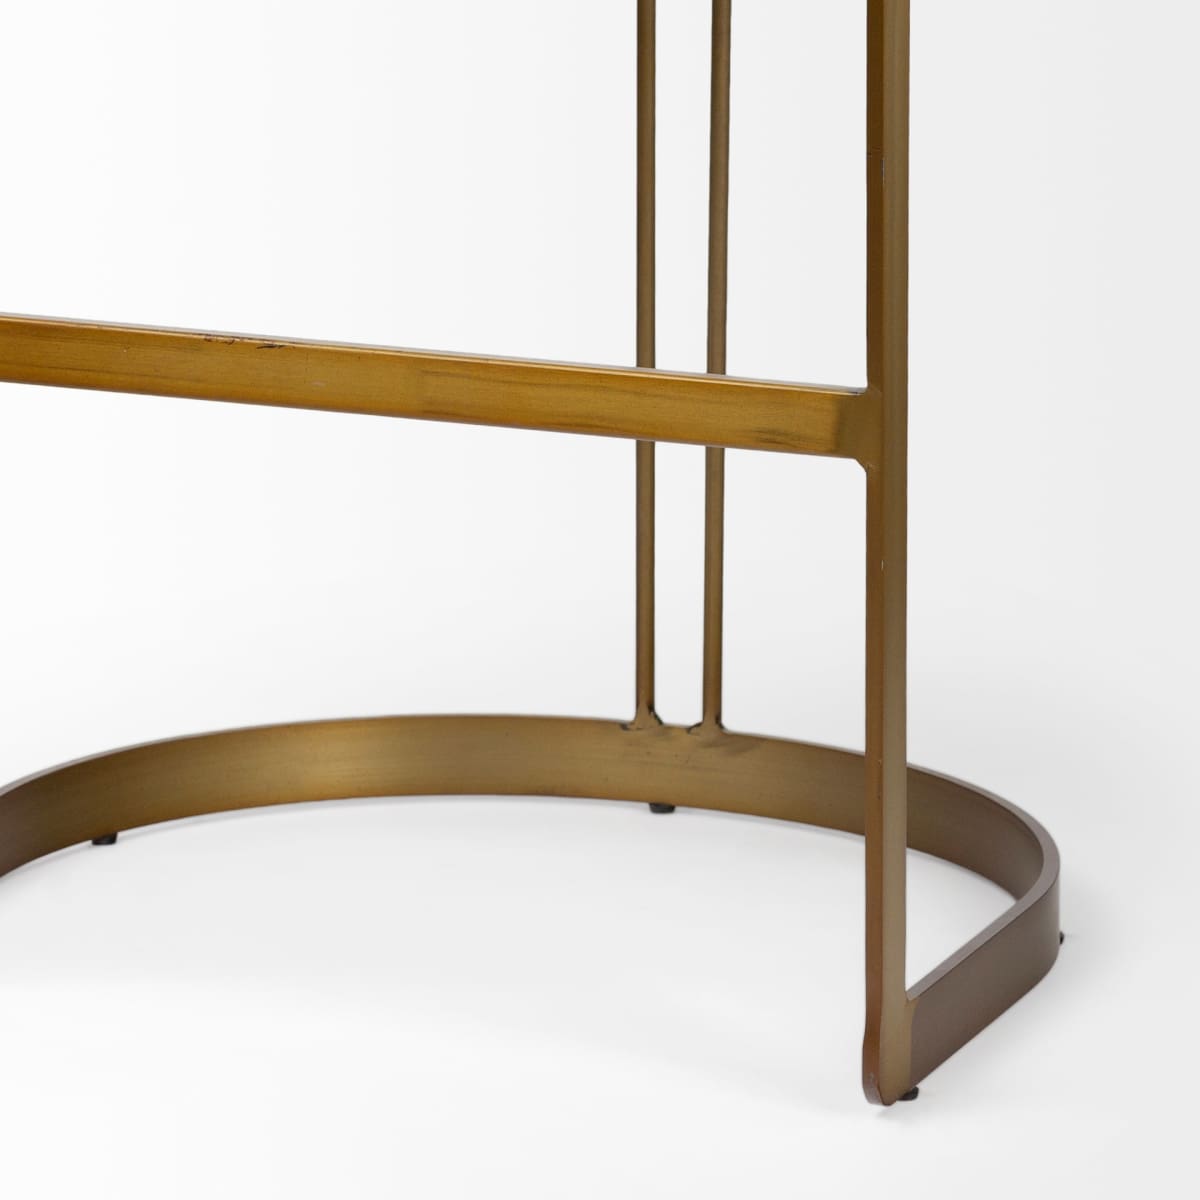 Hollyfield Bar Counter Stool Brown Leather | Gold Metal | Bar - bar-stools